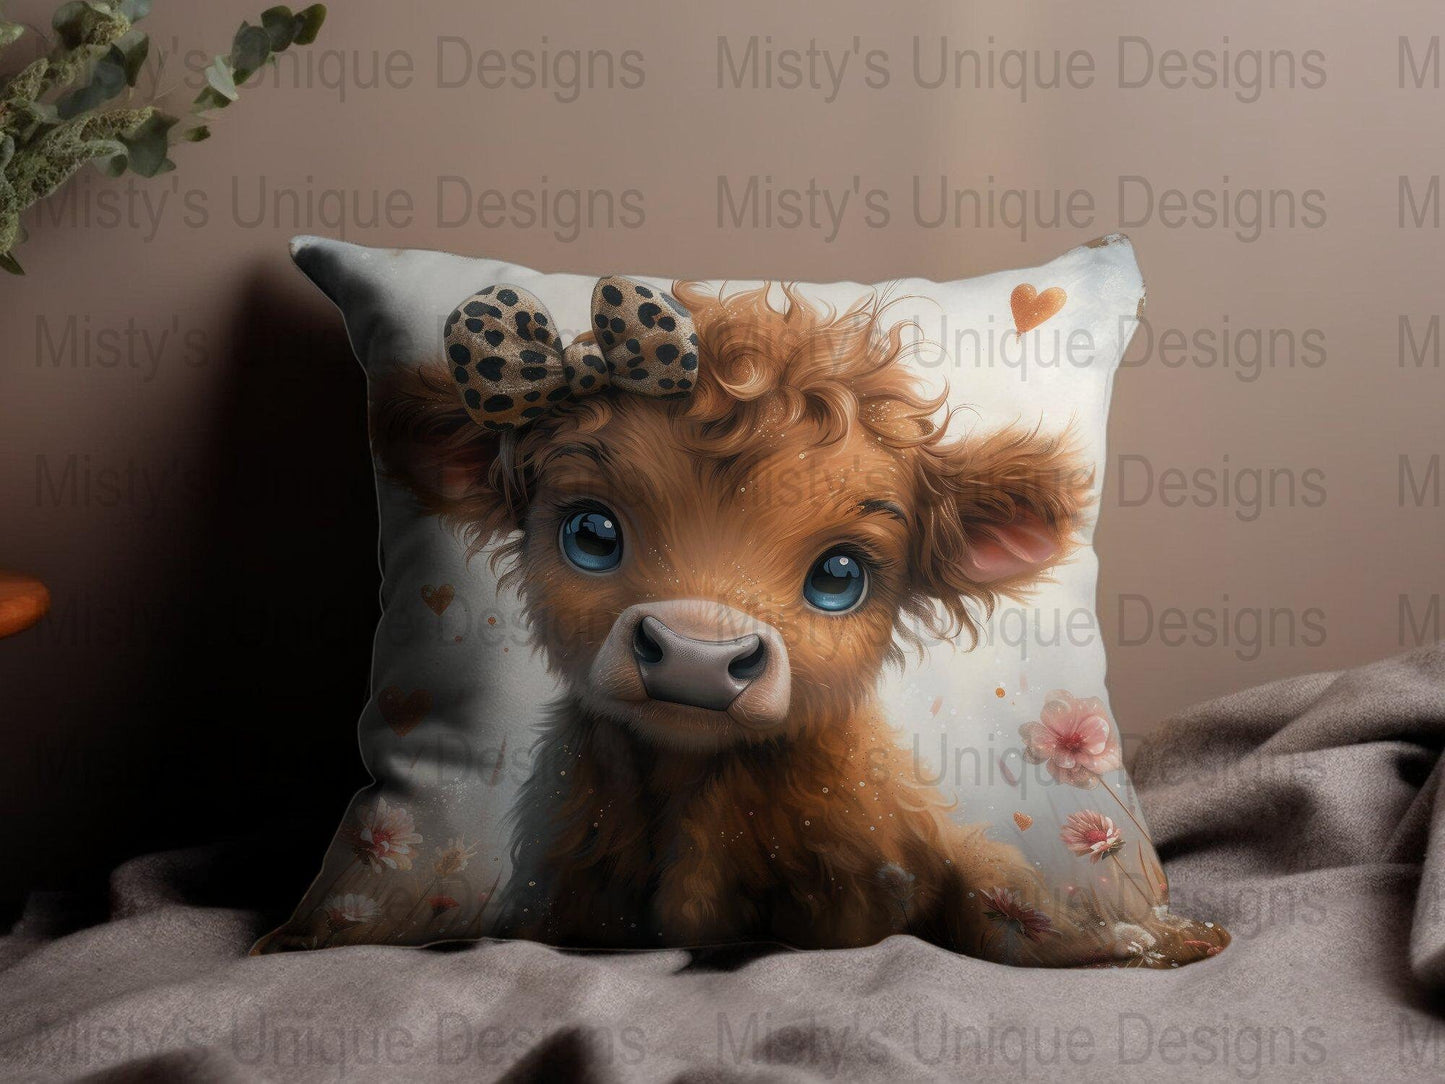 Digital Baby Cow PNG, Cute Highland Cow Digital Paper, Nursery Animal Download, Printable Cartoon Calf Illustration